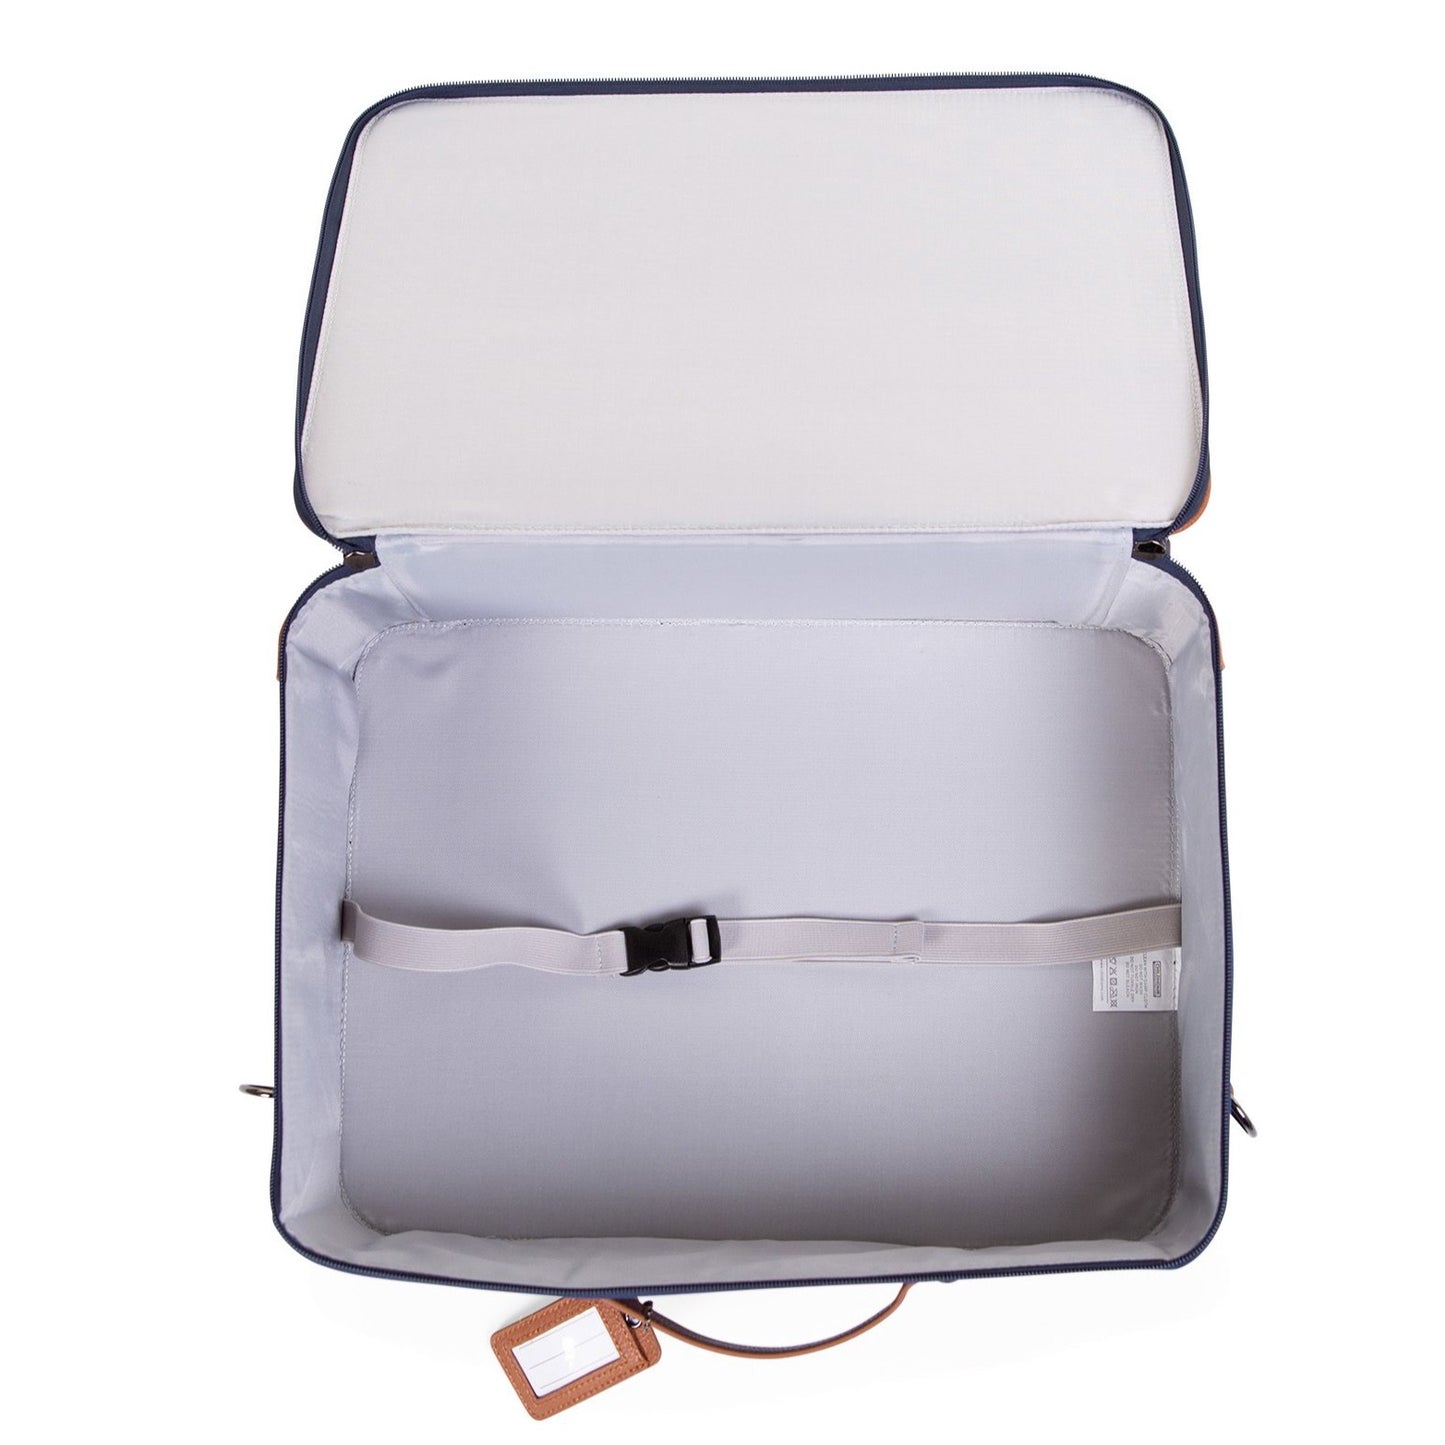 Childhome - Mini Traveller Kids Suitcase - Navy White